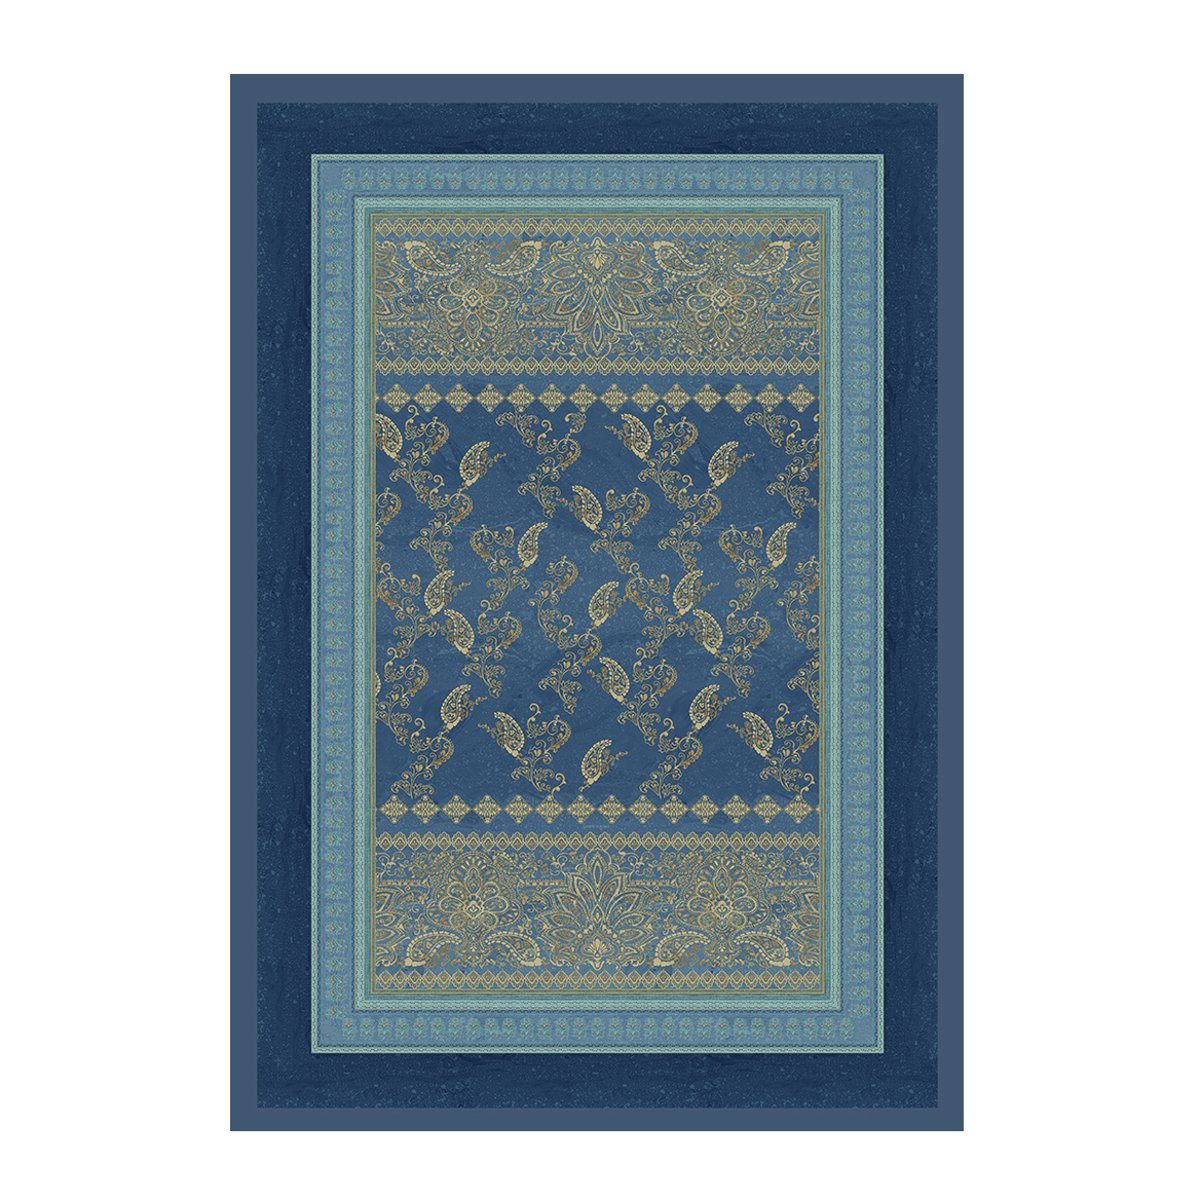 Plaid Bassetti Granfoulard Plaid Decke Wohndecke Matera B1 Blau 135x190, Bassetti, Hochwerige italienische Markenqualität